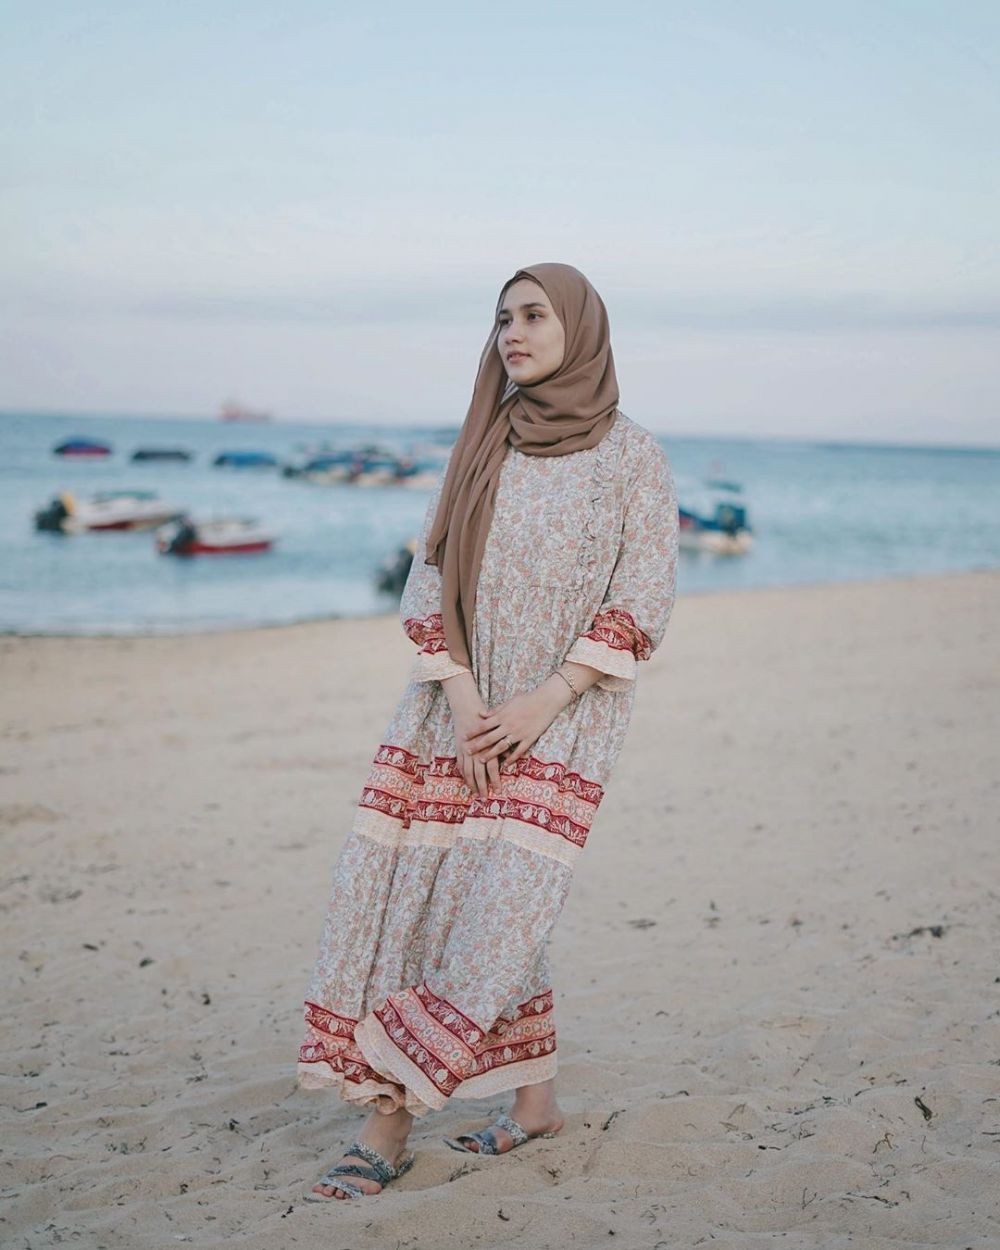 Ide Style Ootd Hijab Di Pantai Jalen Blogs